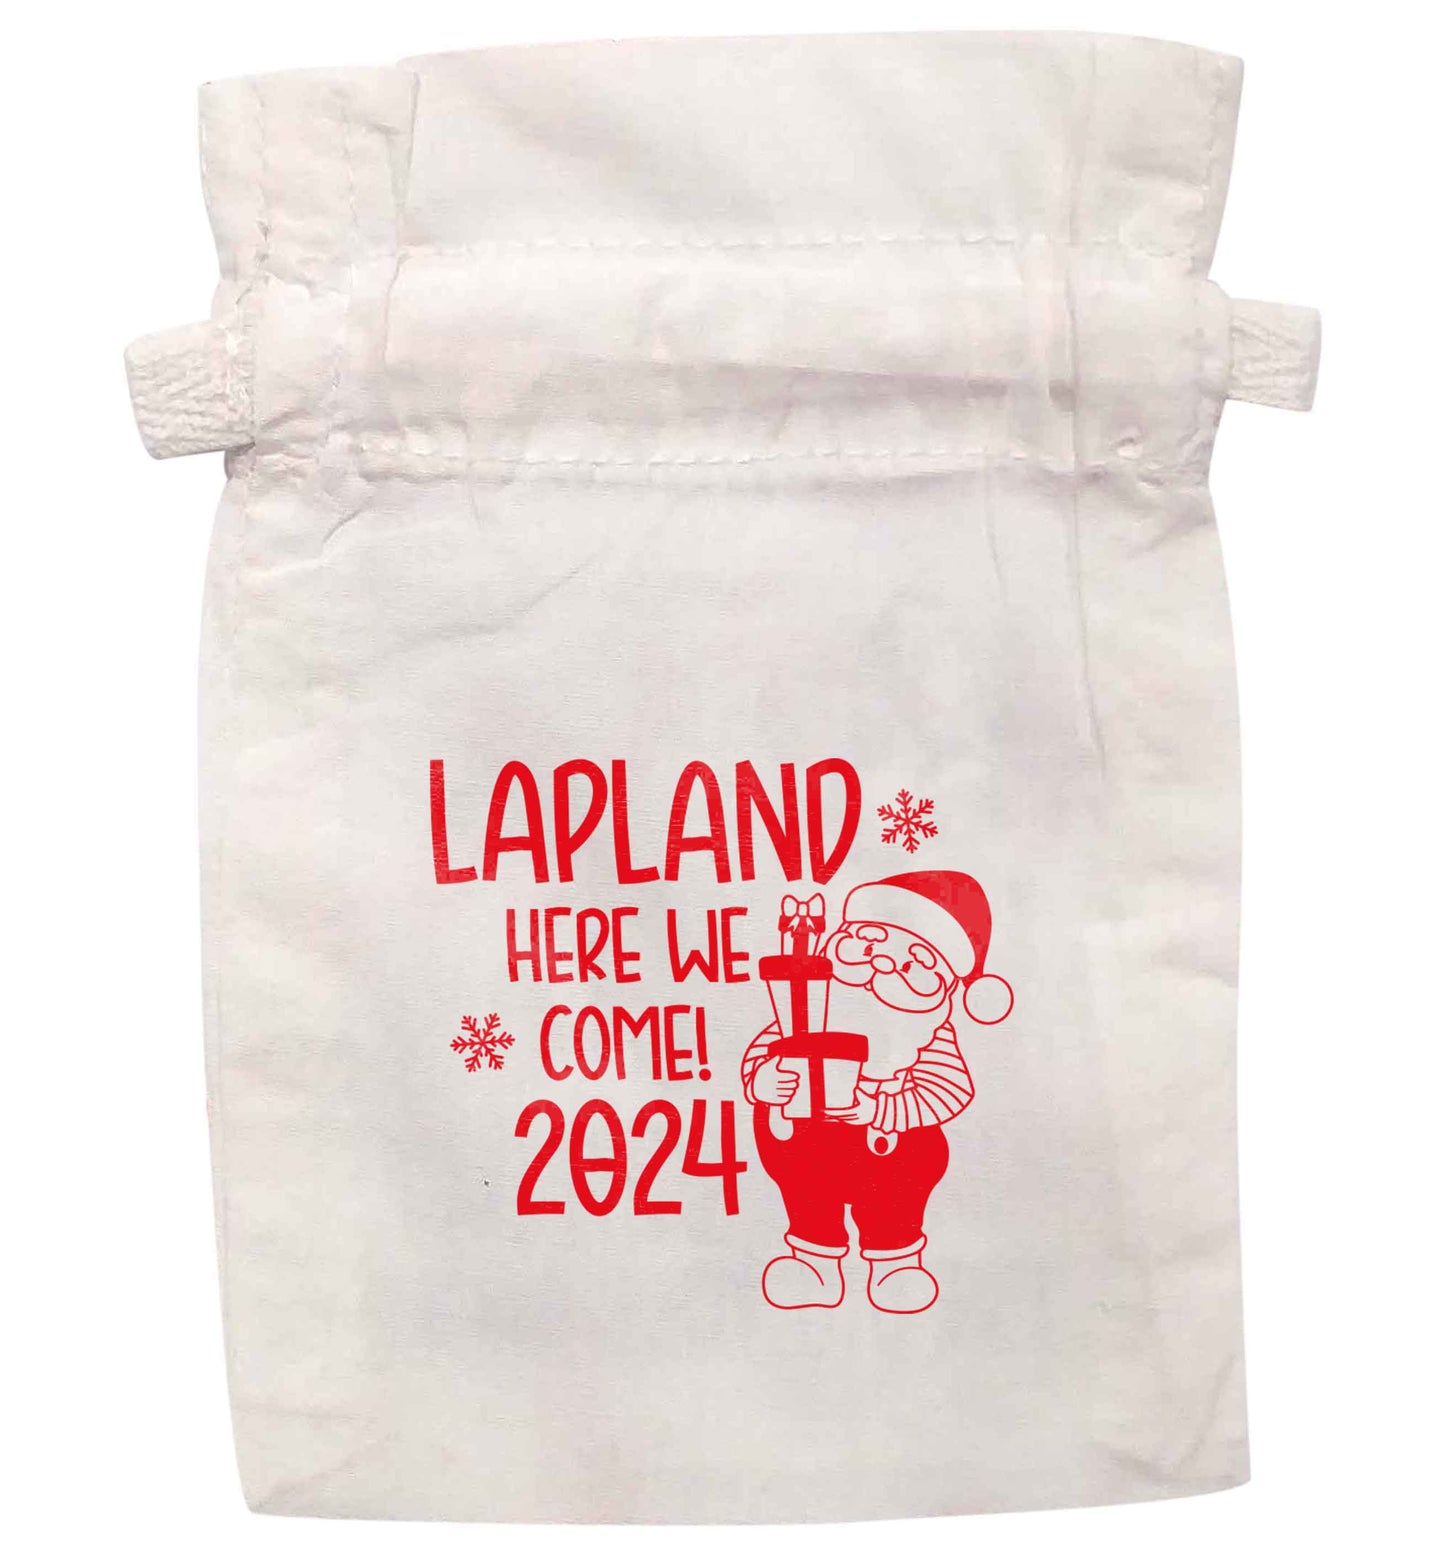 Lapland here we come | XS - L | Pouch / Drawstring bag / Sack | Organic Cotton | Bulk discounts available!